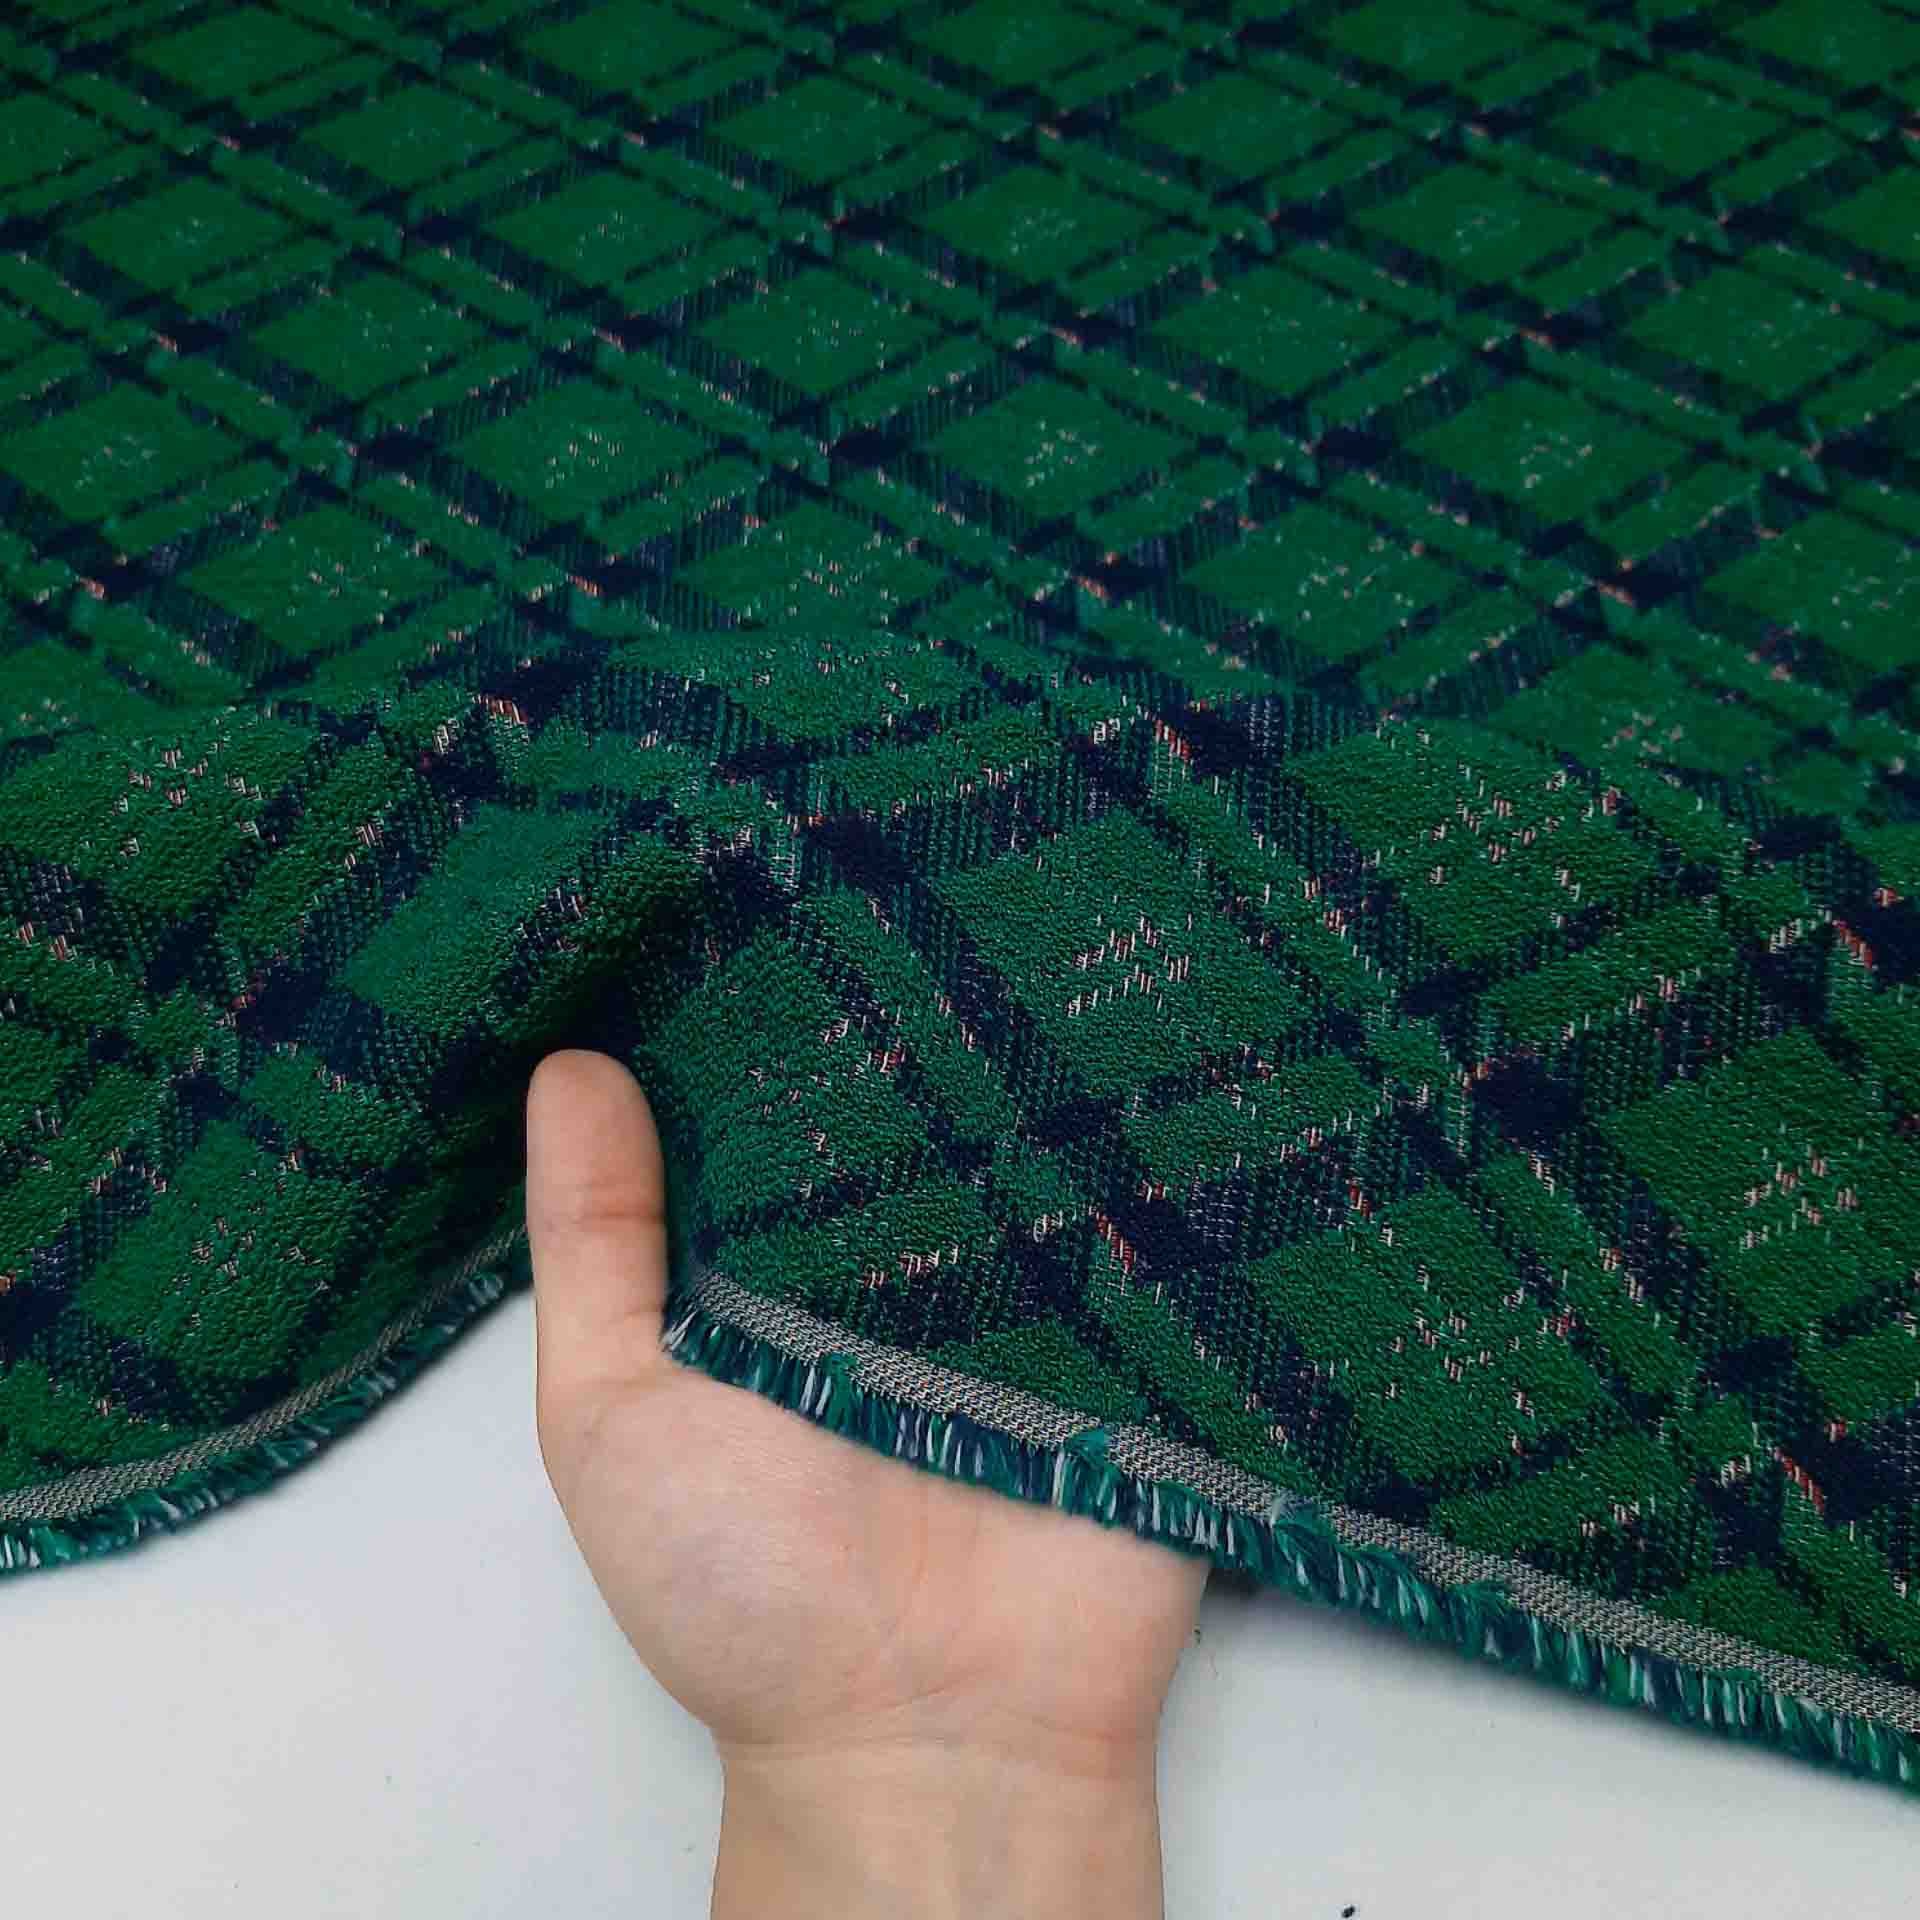 پارچه کشمیر (توییت) رنگ سبز 